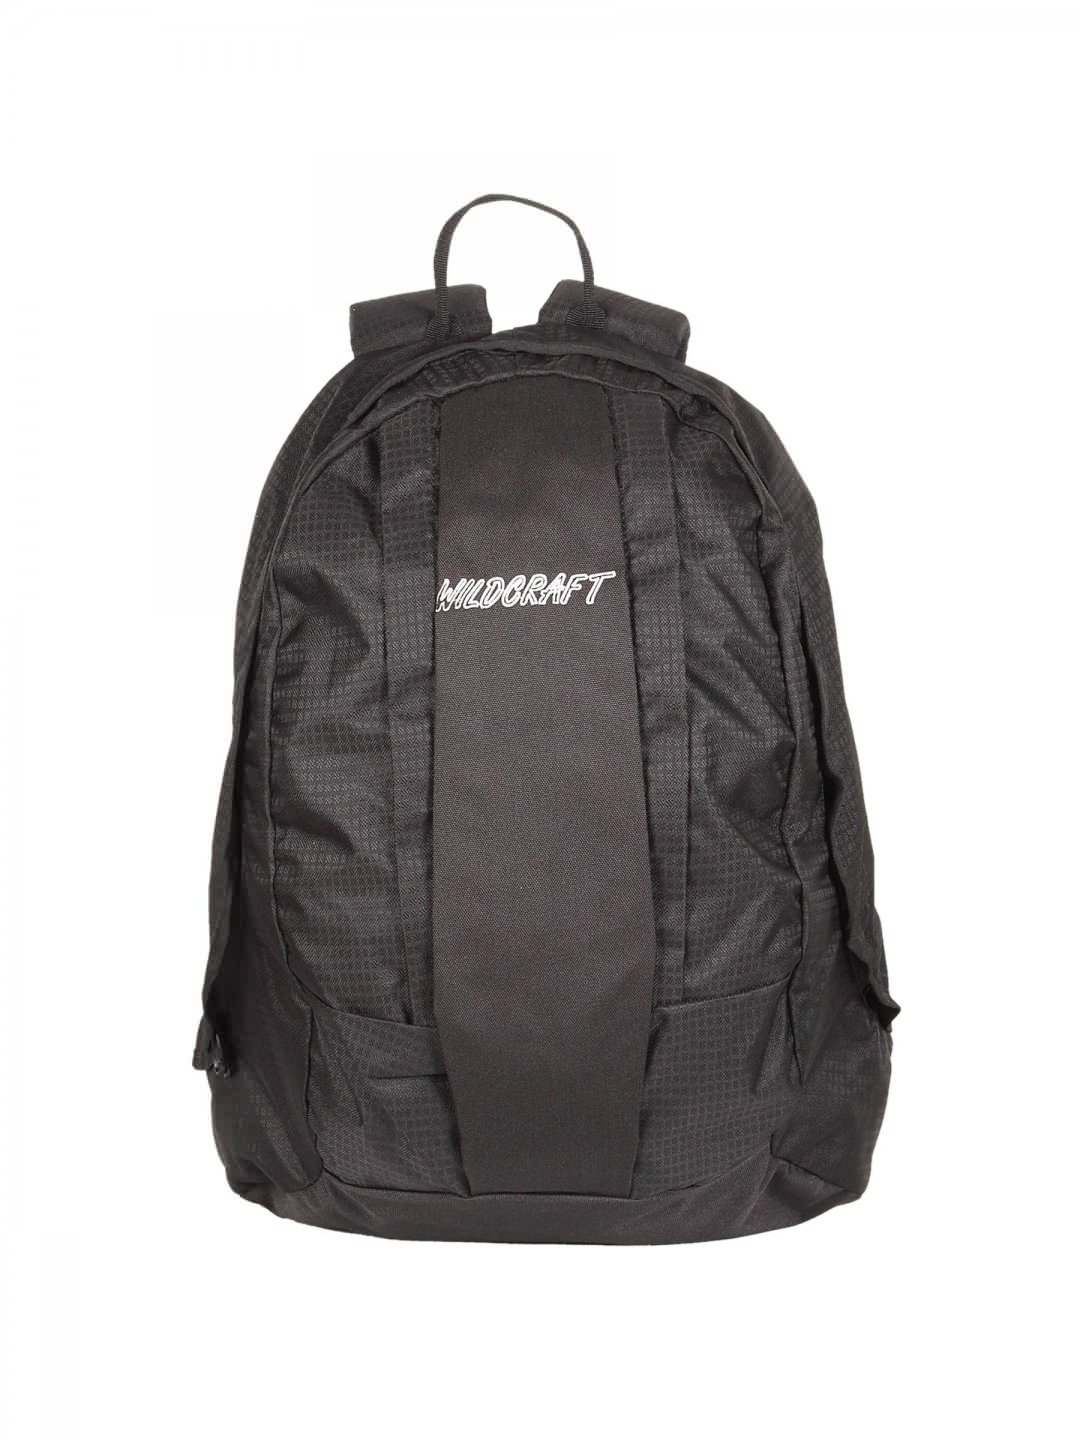 Wildcraft Unisex Black Solid Backpack